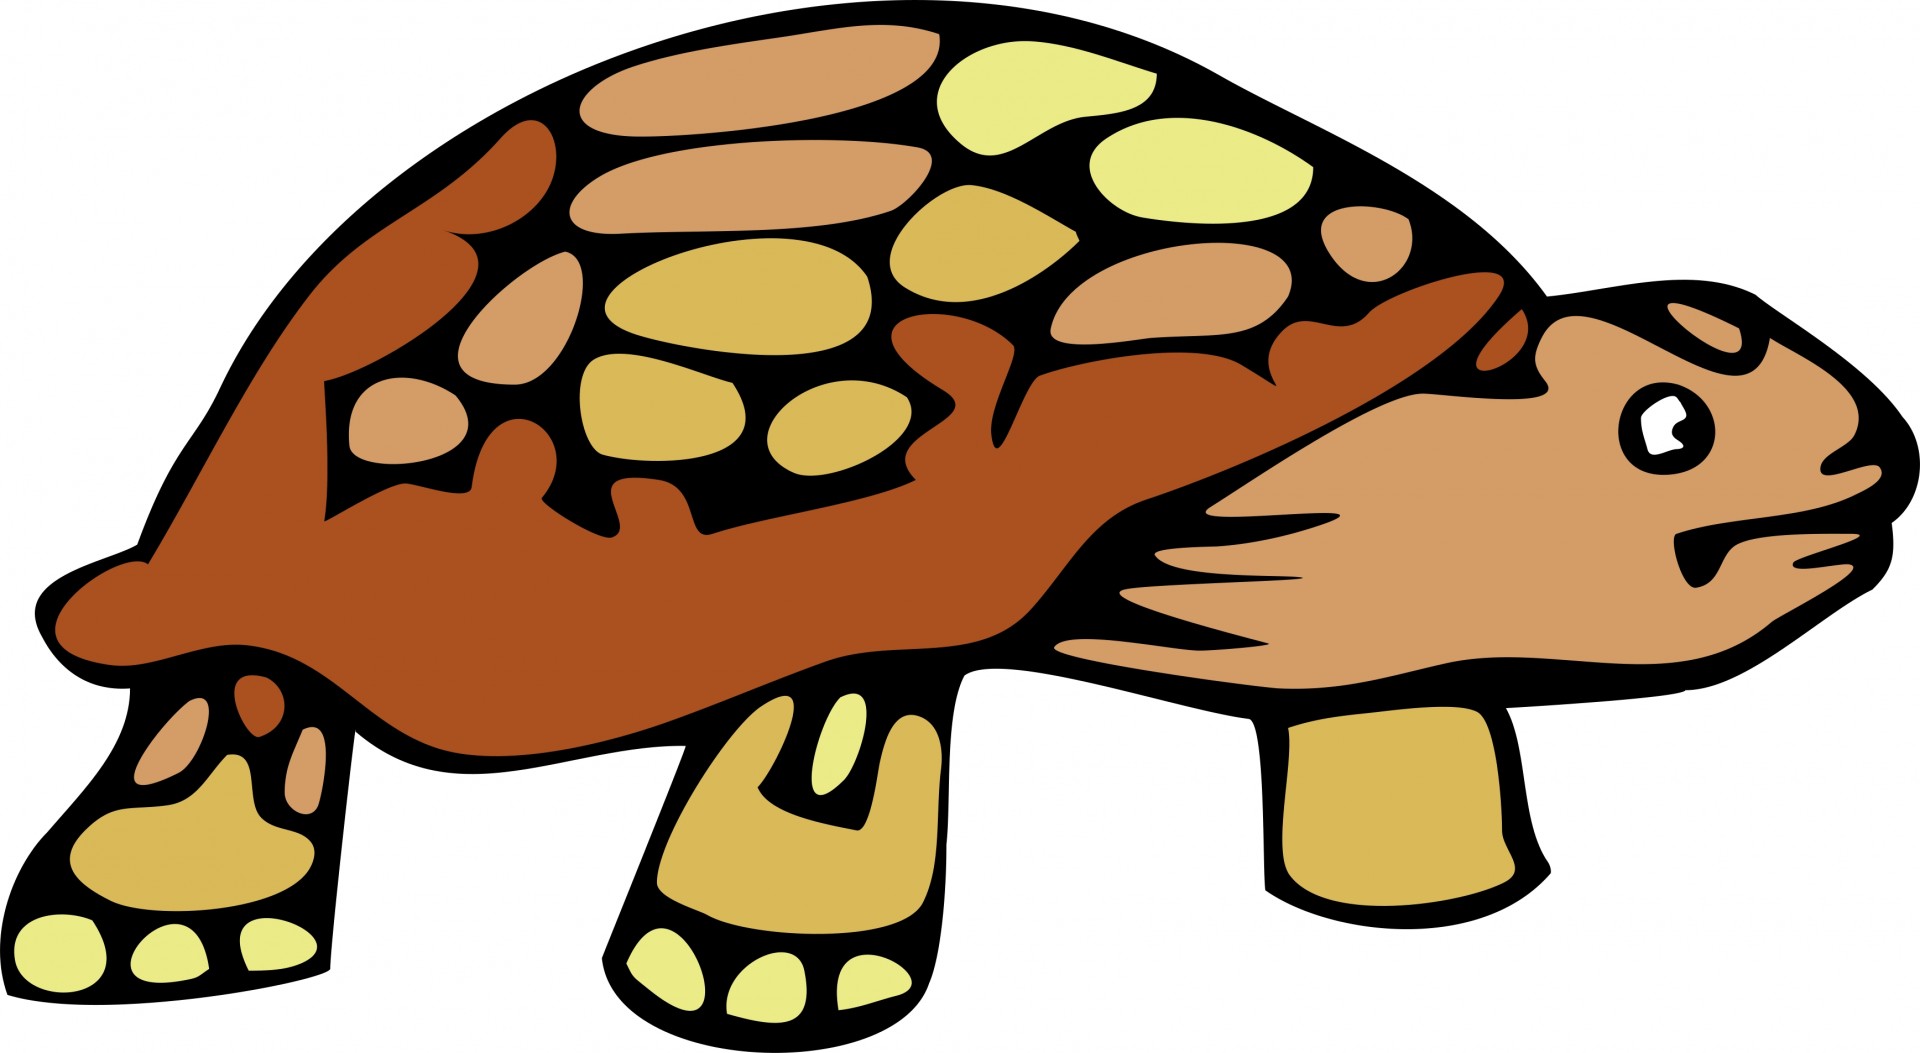 ... Clipart images of tortoise - ClipartFox ...